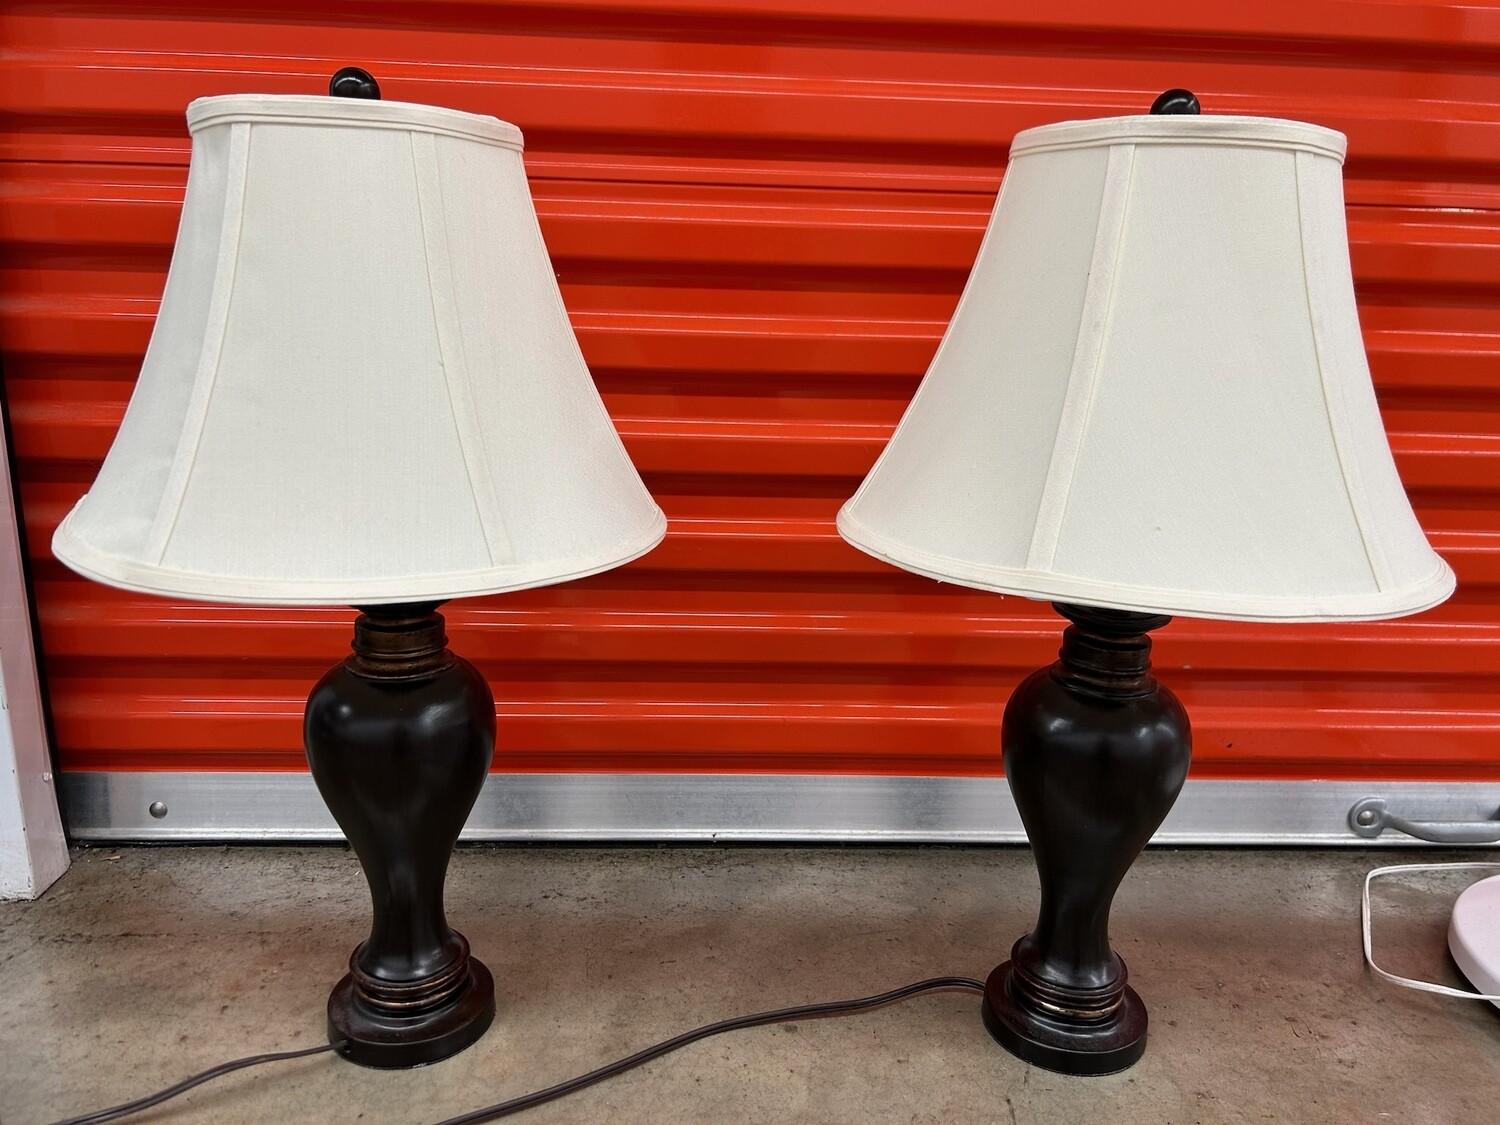 2 matching Table Lamps, dark brown base #2314